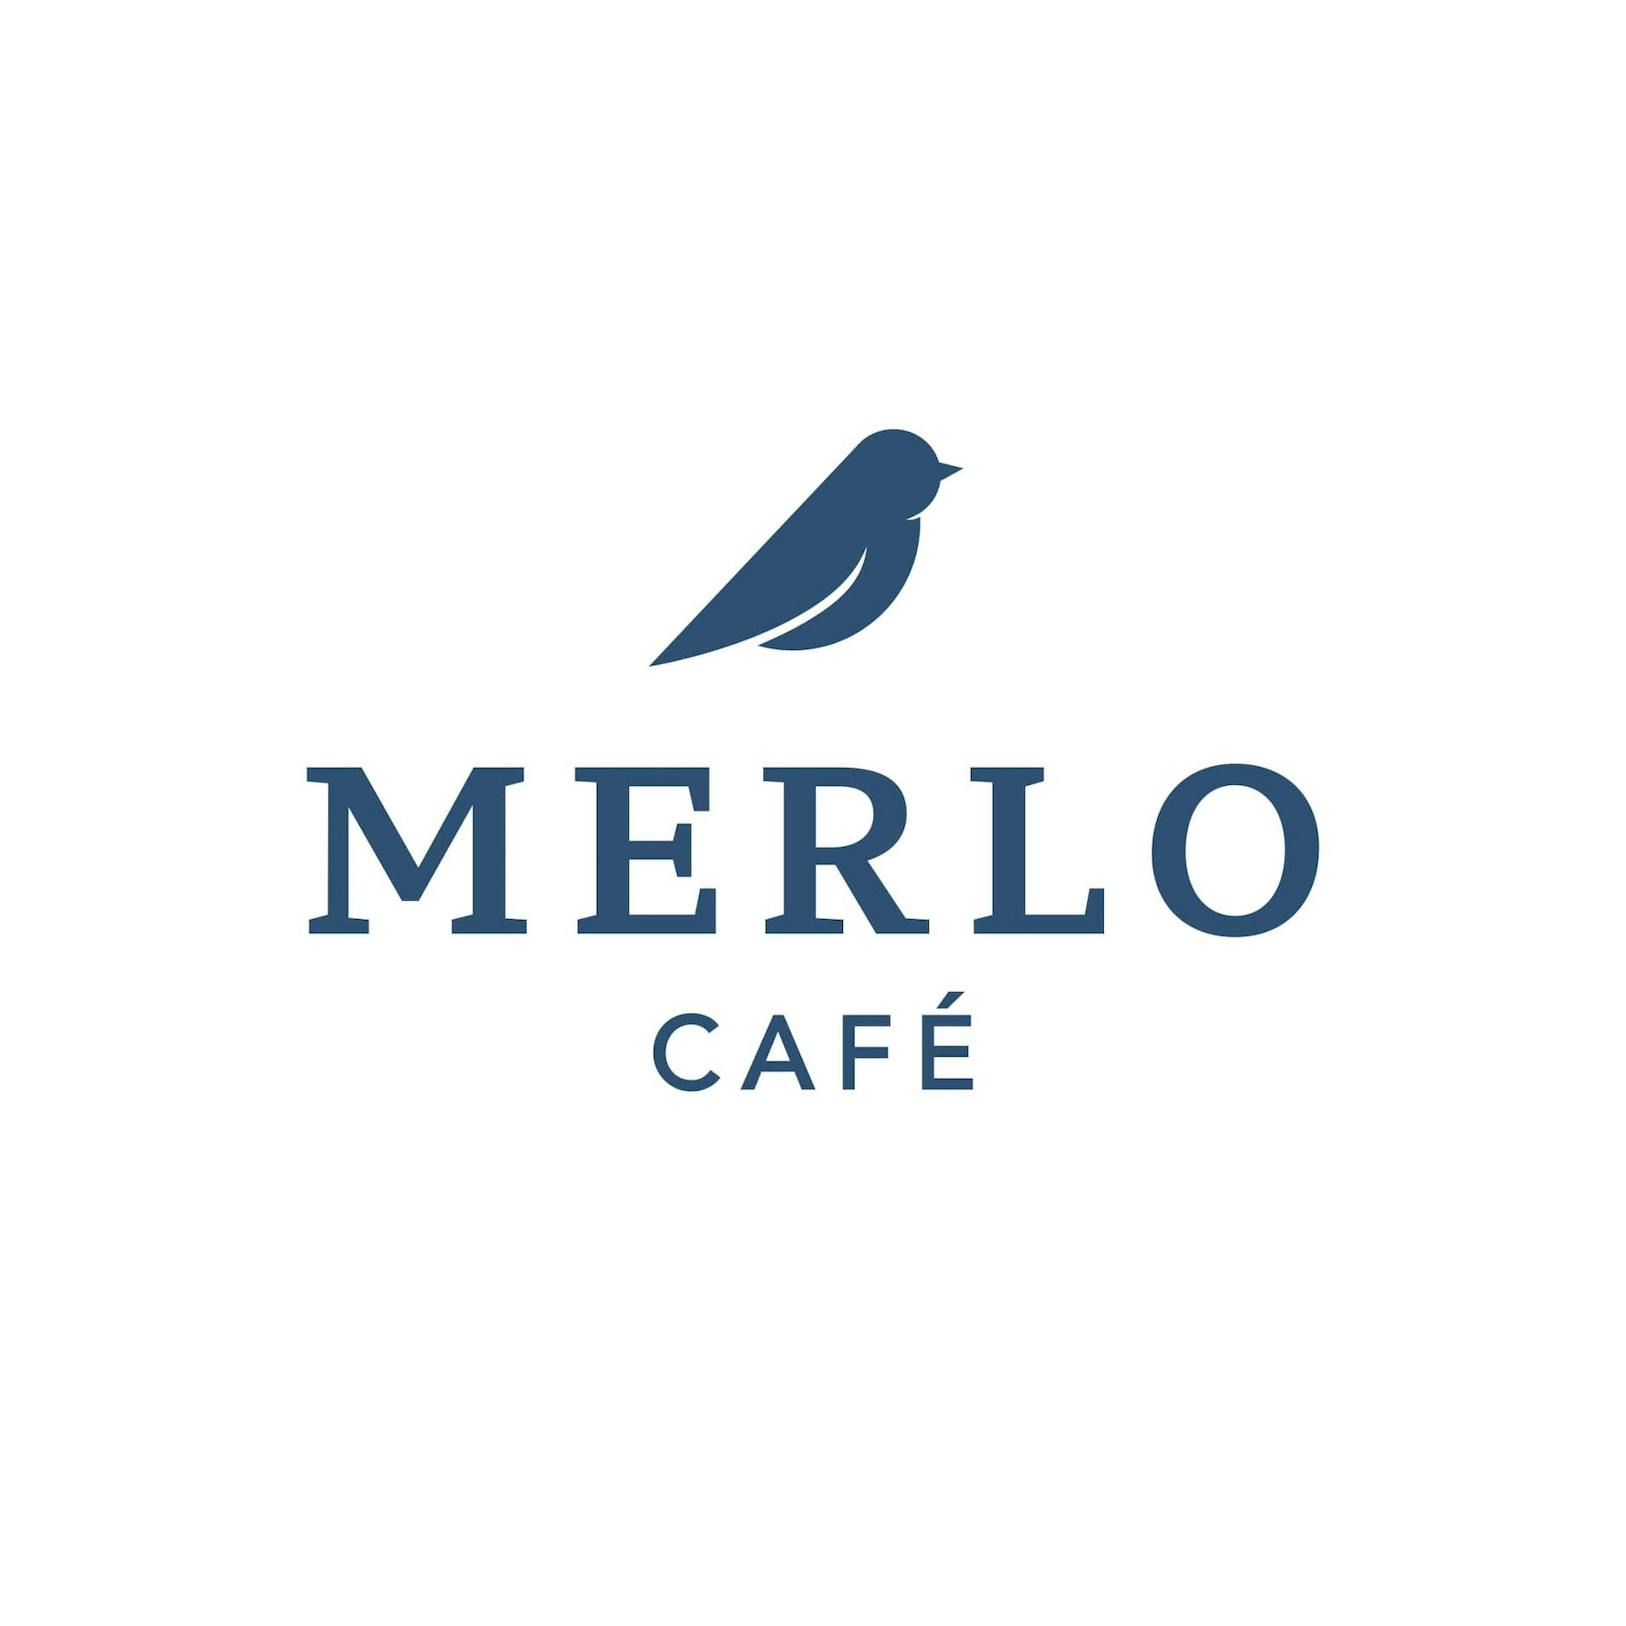 Merlo Cafe